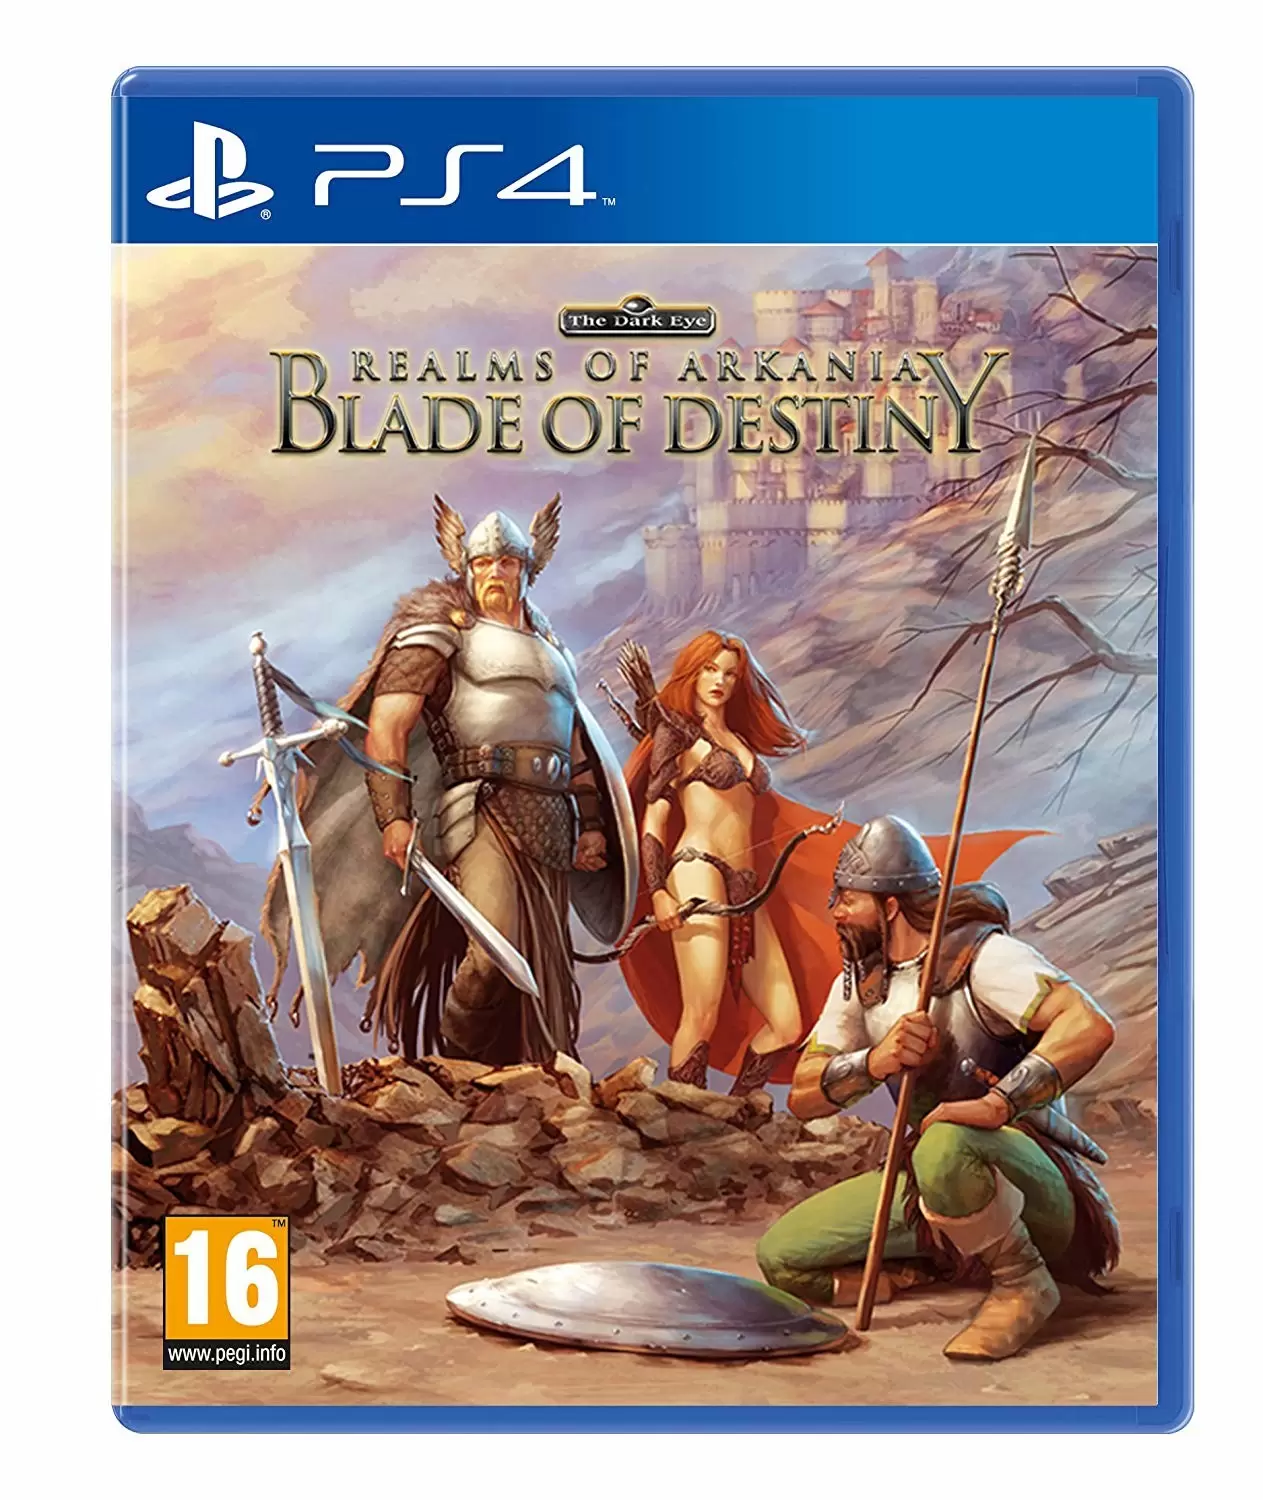 PS4 Games - Realms Of Arkania Blade Of Destiny